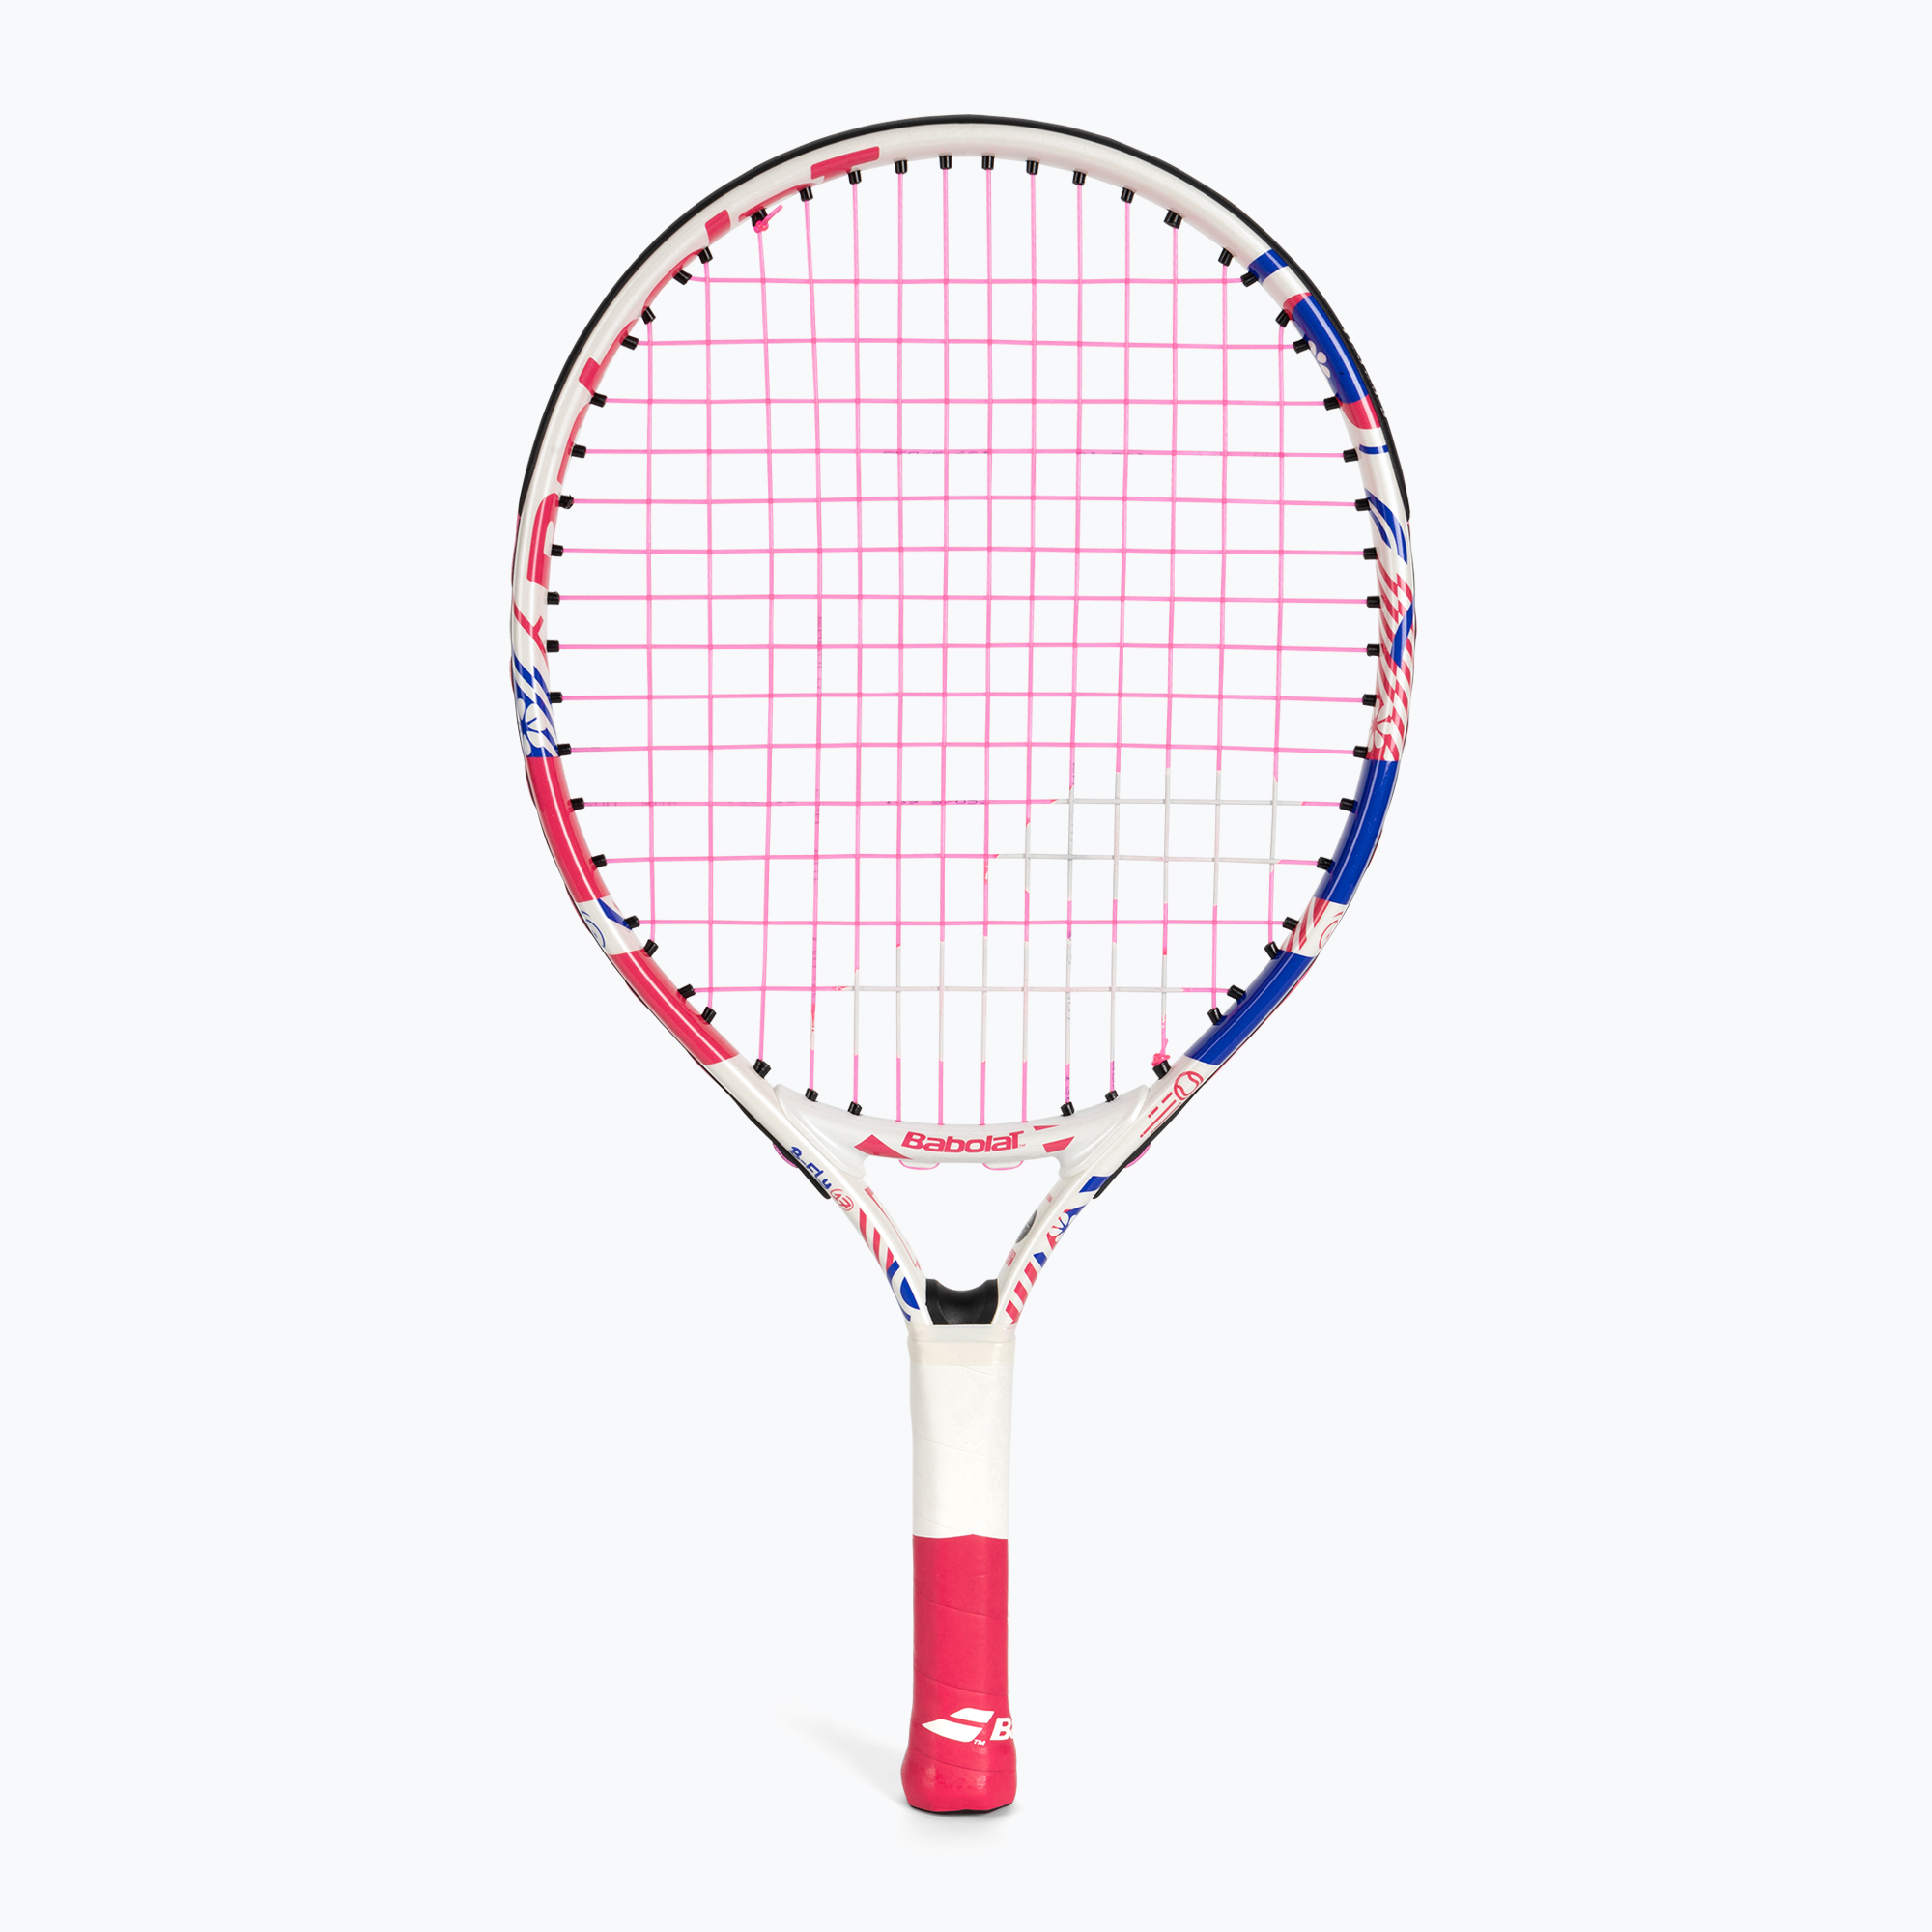 Detská tenisová raketa Babolat B Fly 17 bielo-ružová 140483